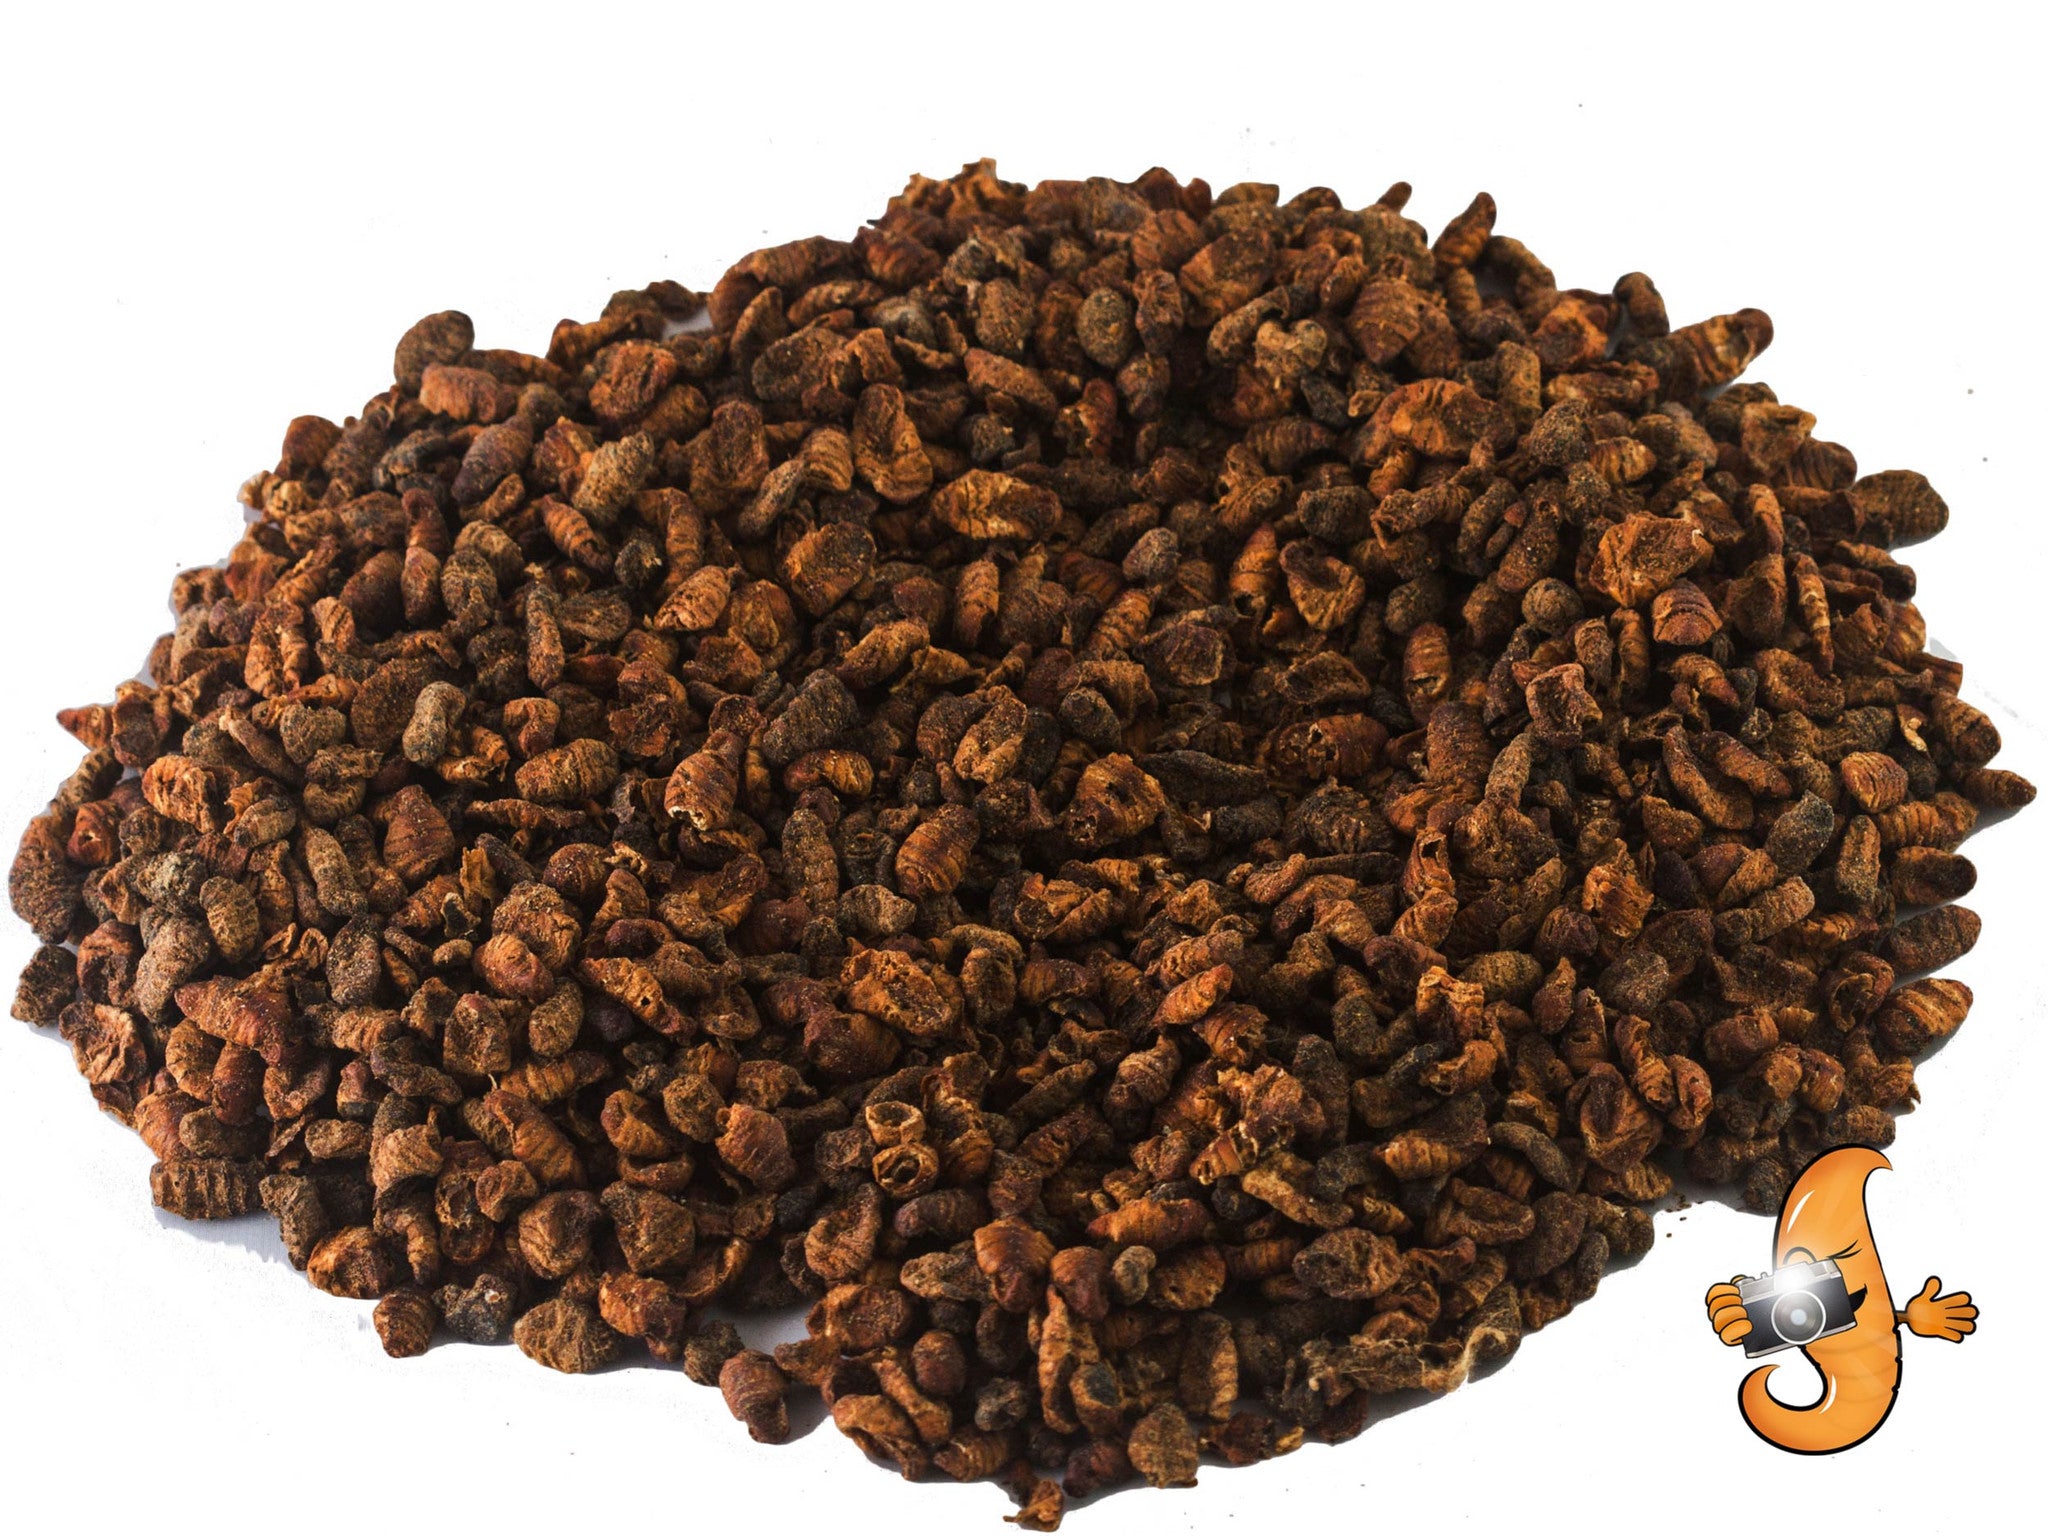 908g (2lb) Chubby Dried Silkworm Pupae